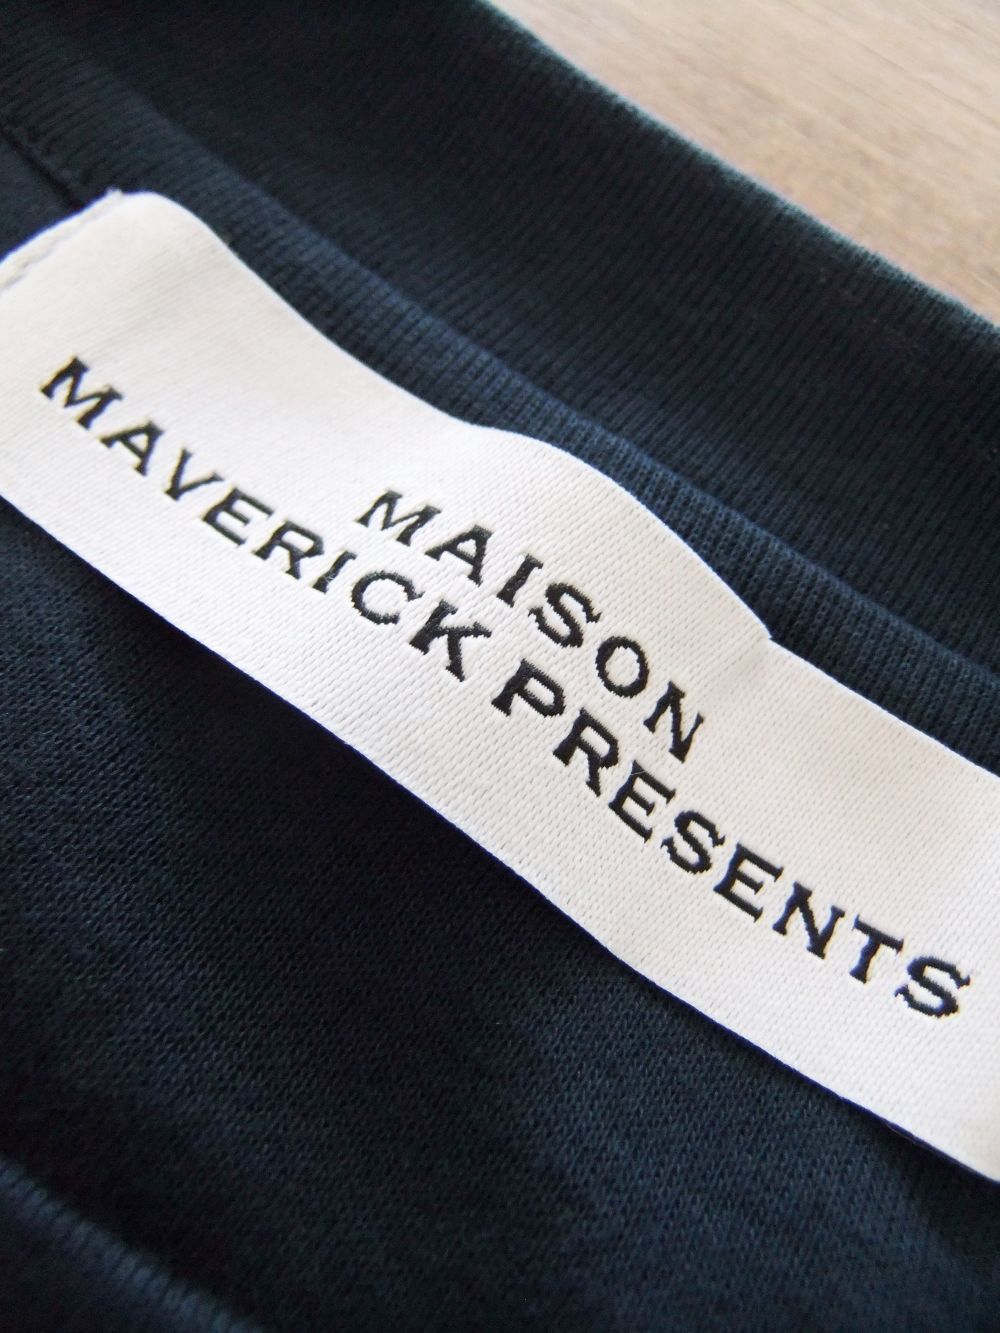 MAISON MAVERICK PRESENTS - ロープ 刺繍 ロゴ入り Tシャツ (ネイビー